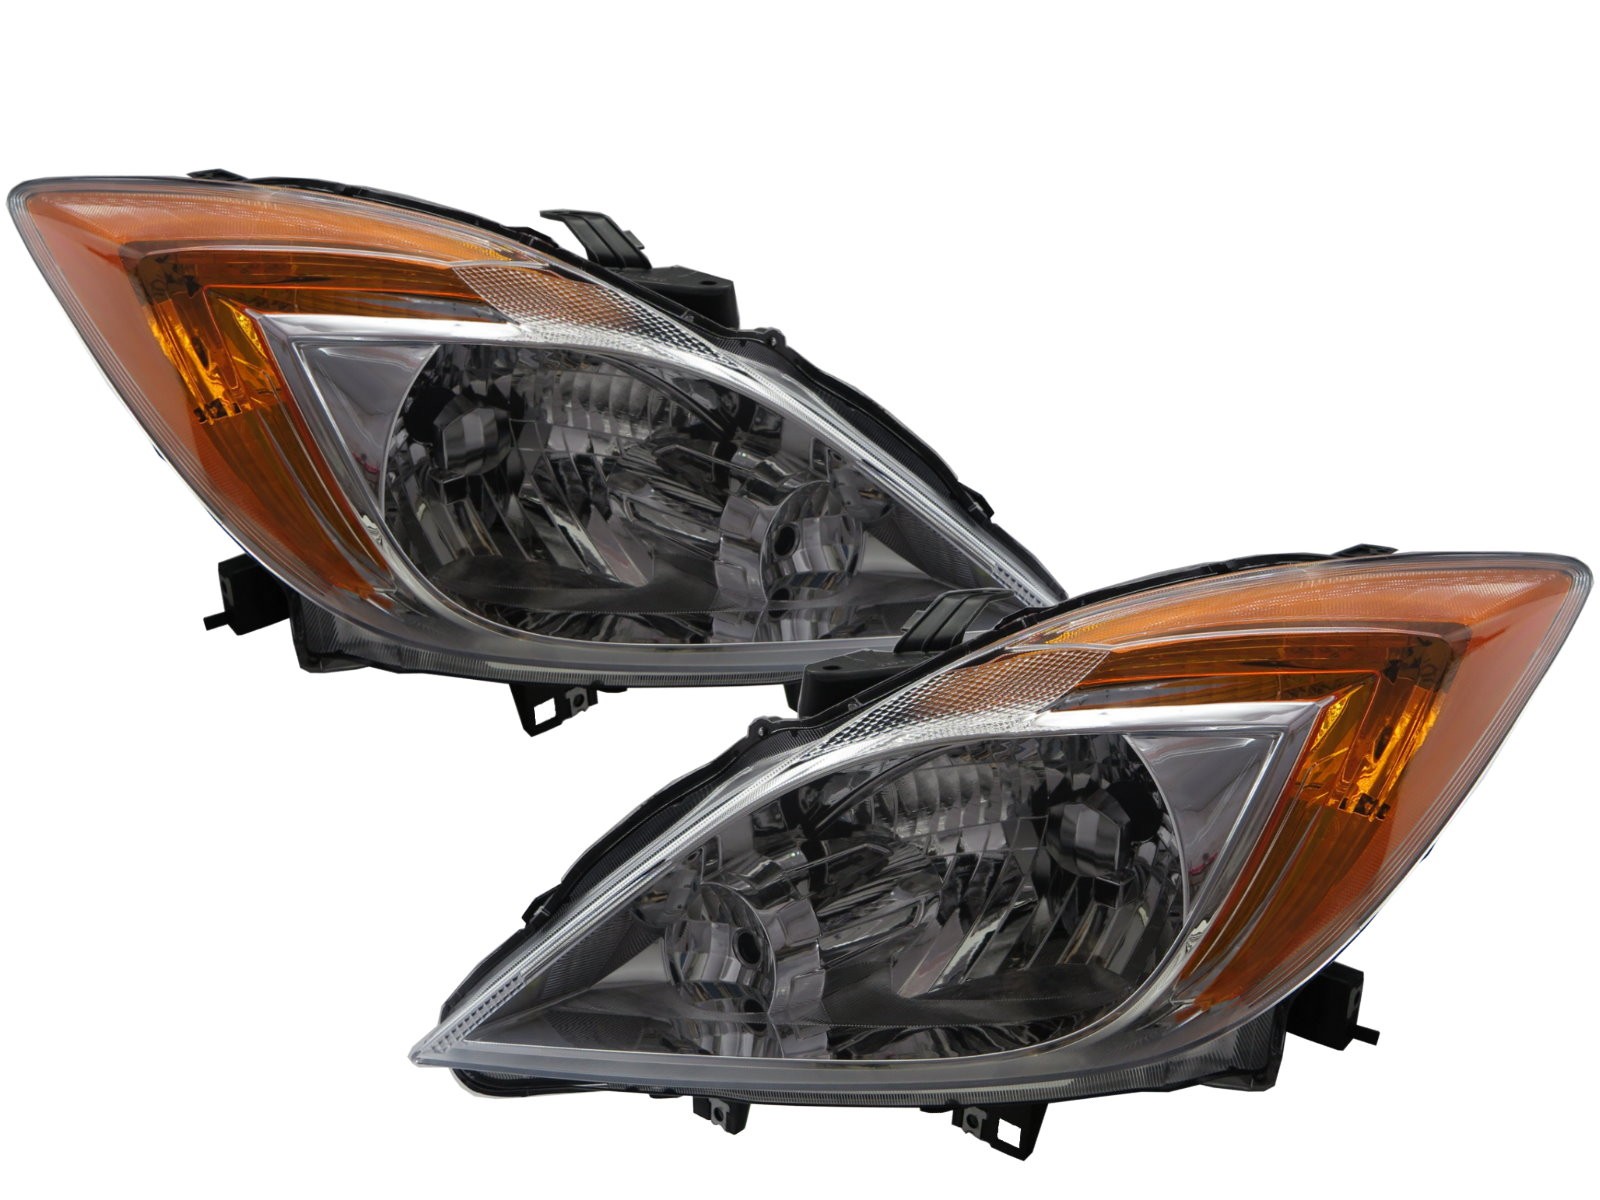 CrazyTheGod BT-50 Second generation 2011-2015 pickup 2D/4D Crystal Headlight Headlamp Chrome for MAZDA LHD